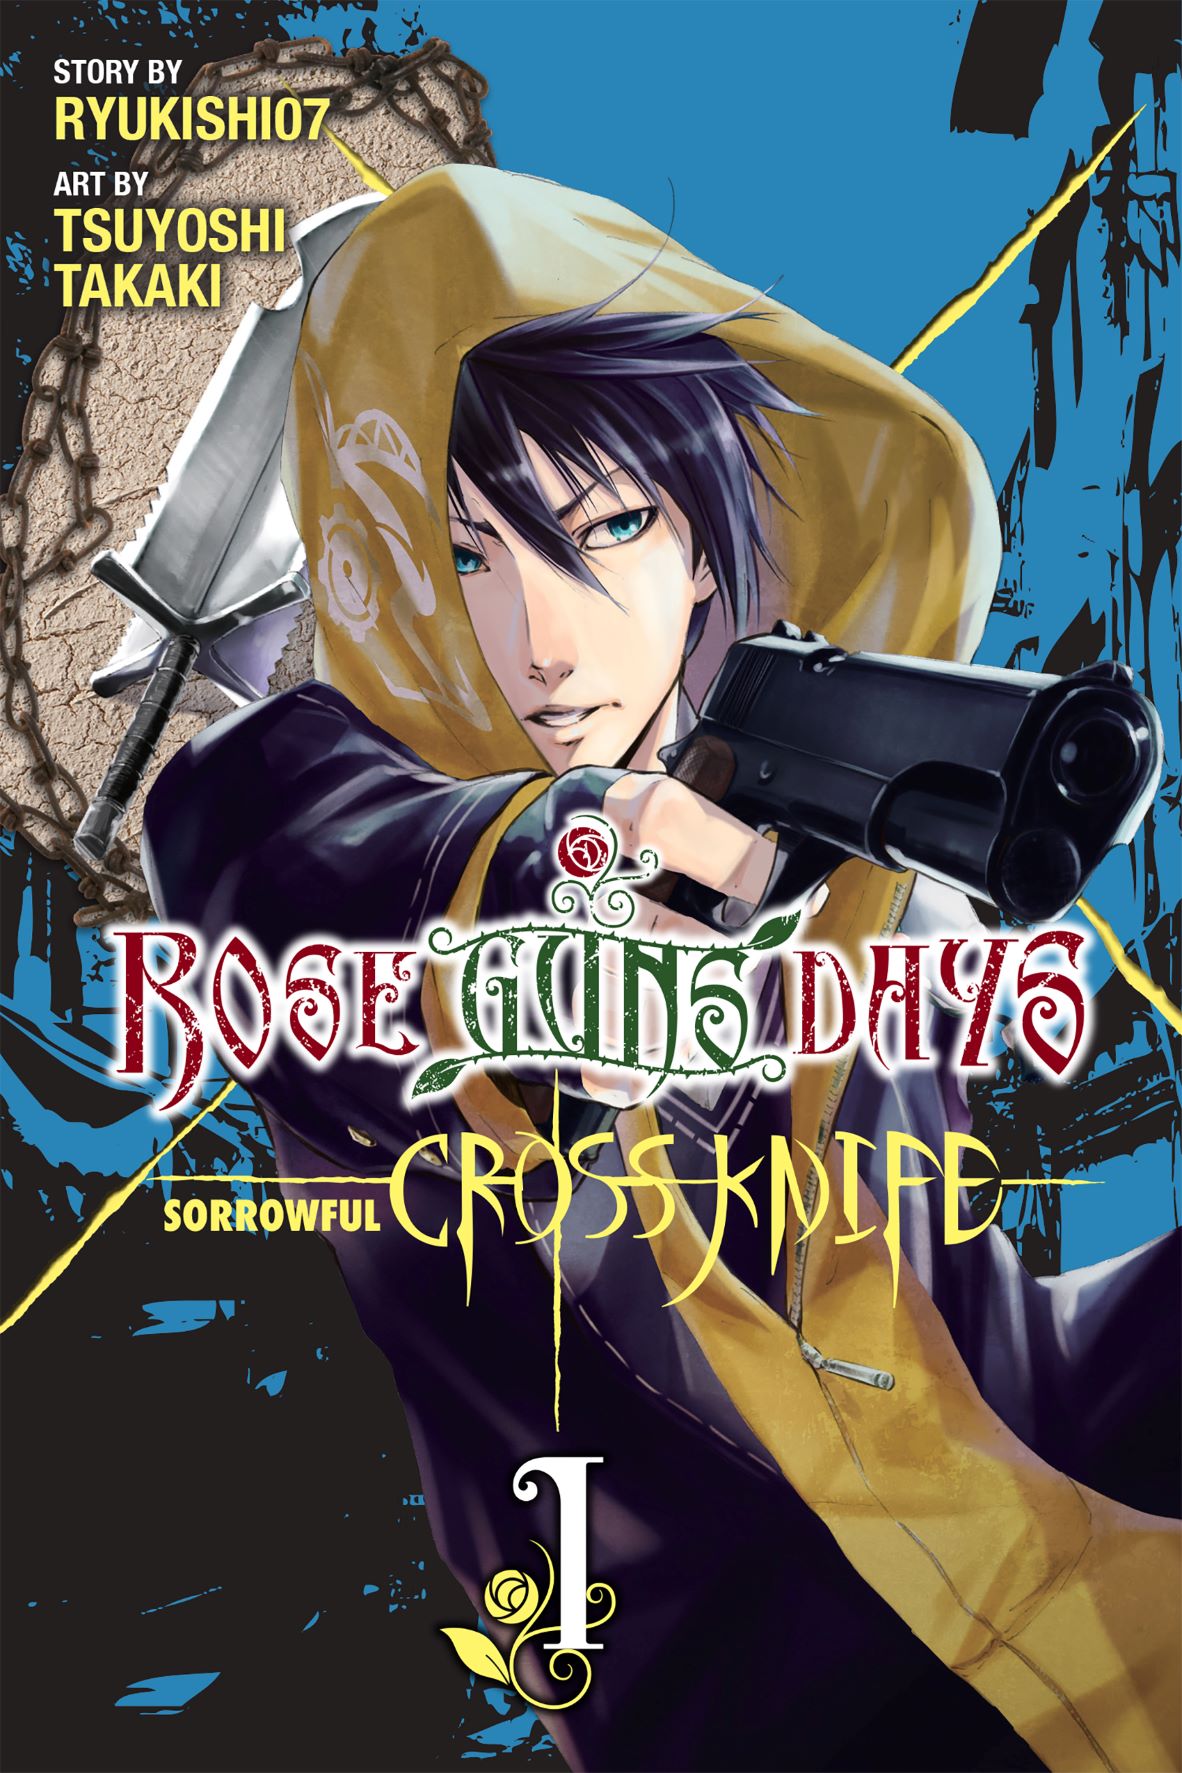 Rose Guns Days Sorrowful Cross Knife1